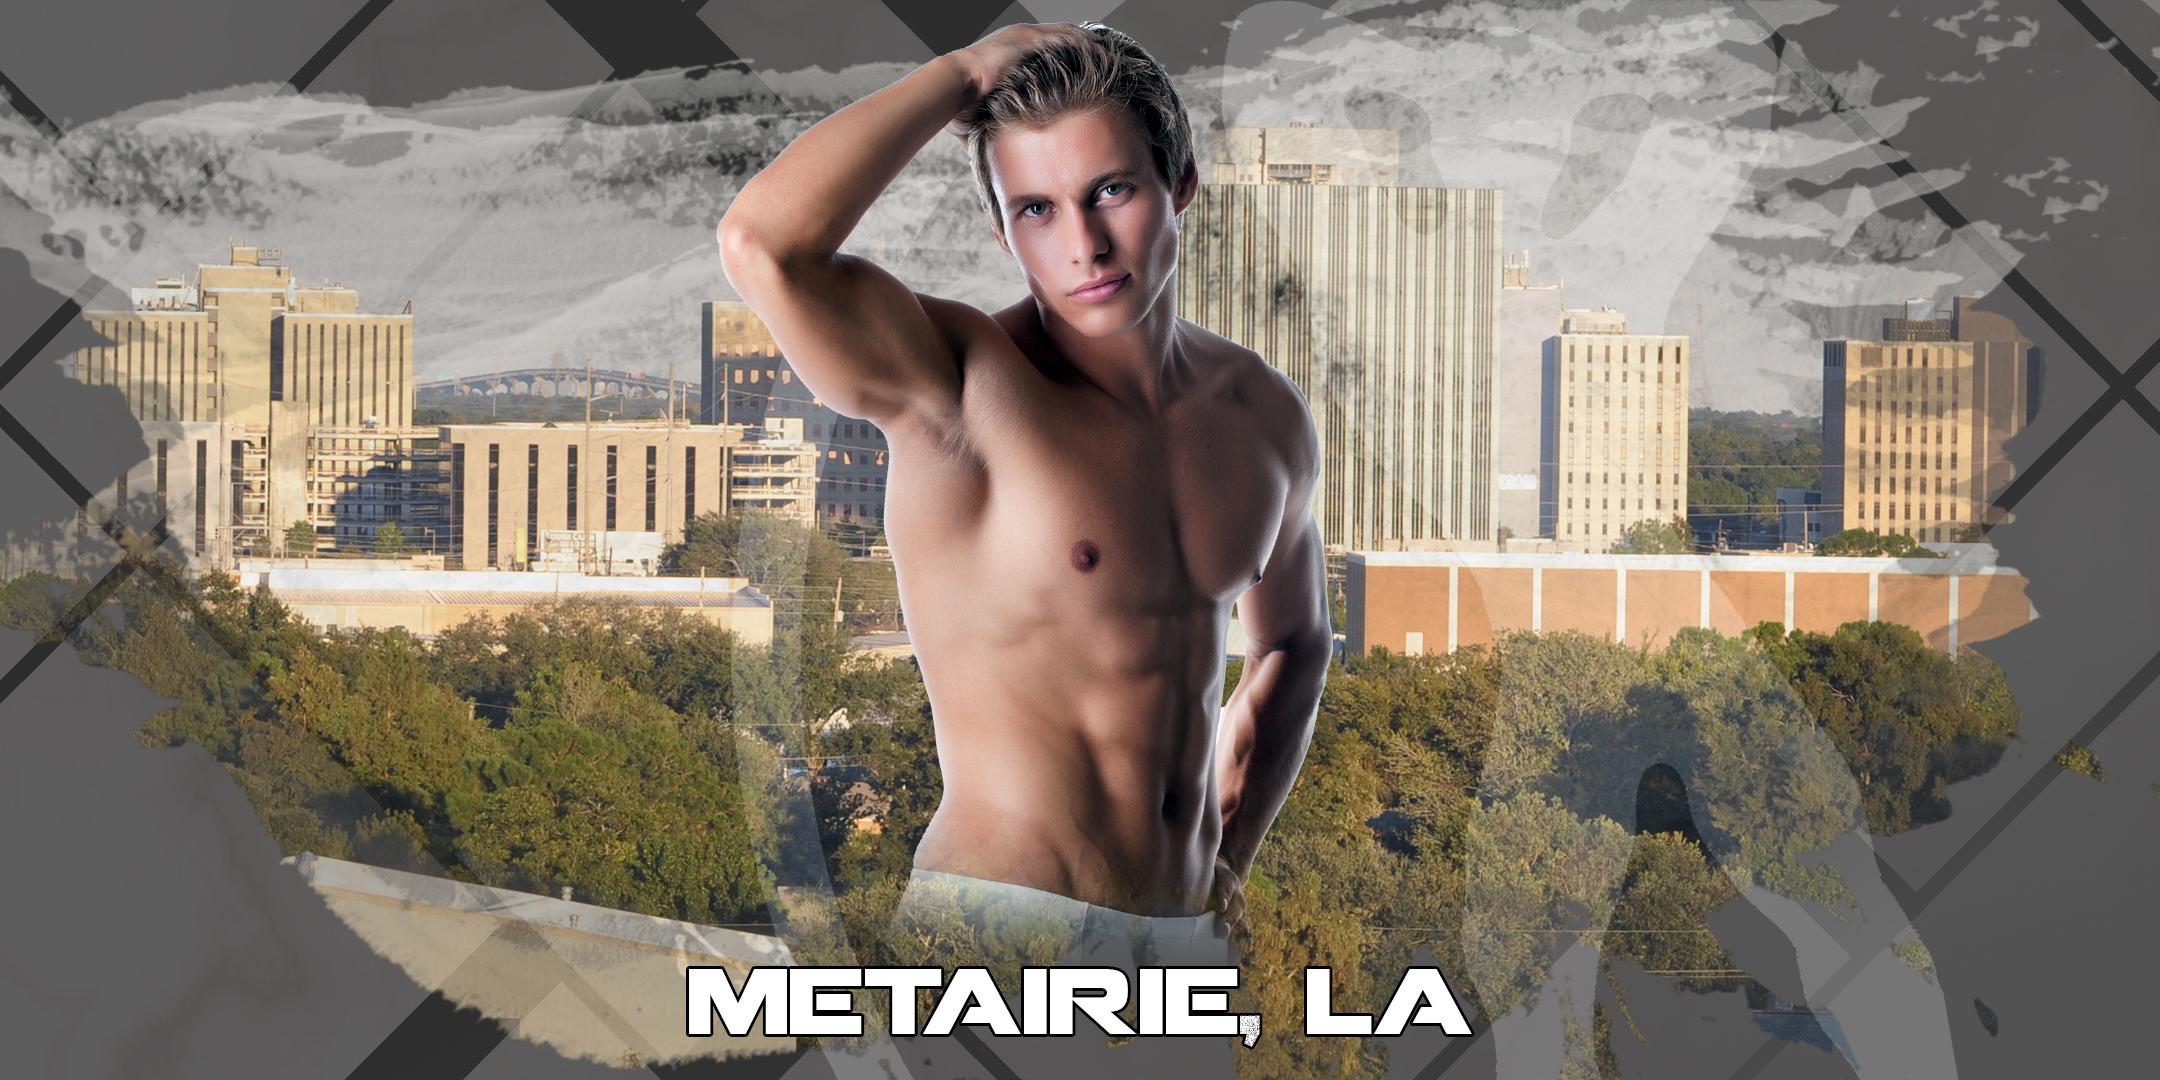 BuffBoyzz Gay Friendly Male Strip Clubs & Male Strippers Metairie, LA 8-10 PM